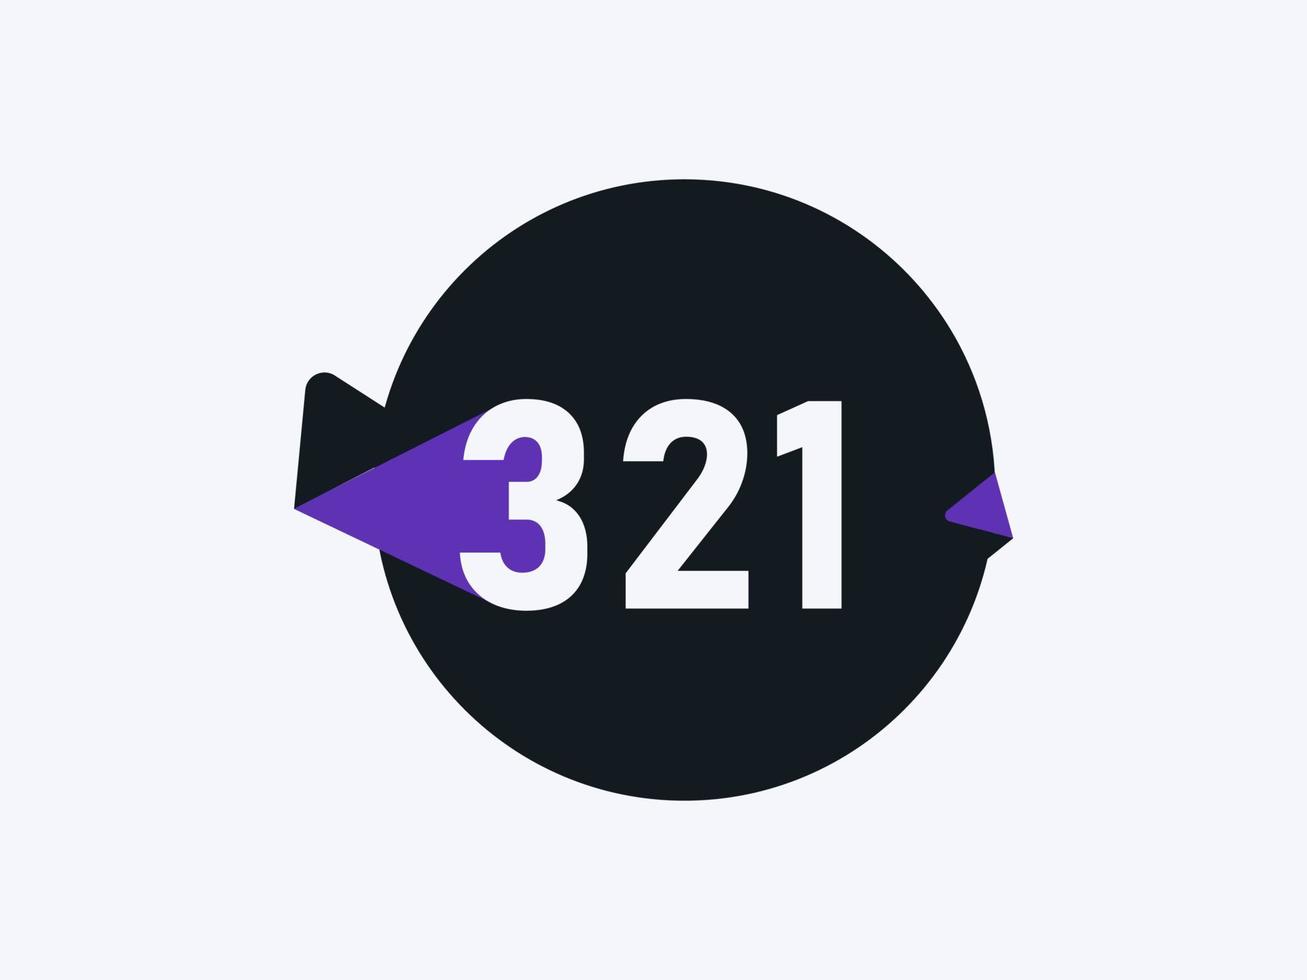 321 Number logo icon design vector image. Number logo icon design vector image